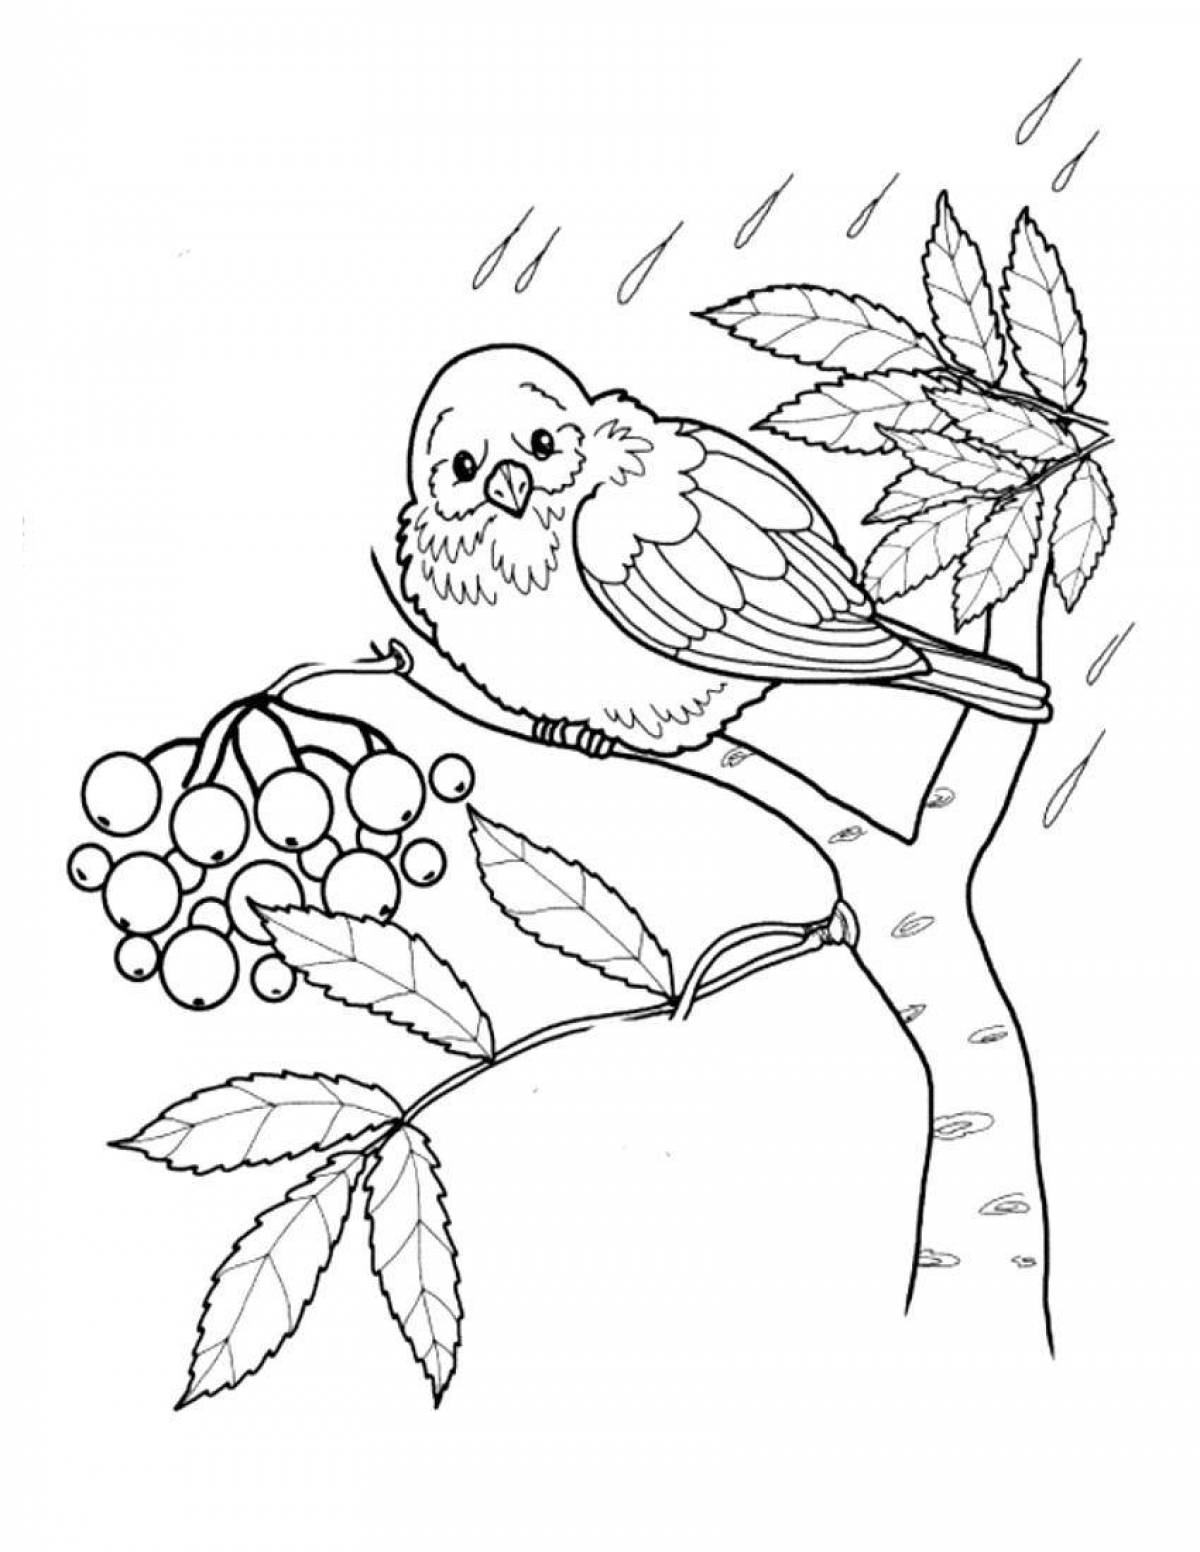 Artistic drawing of a bullfinch on a rowan branch